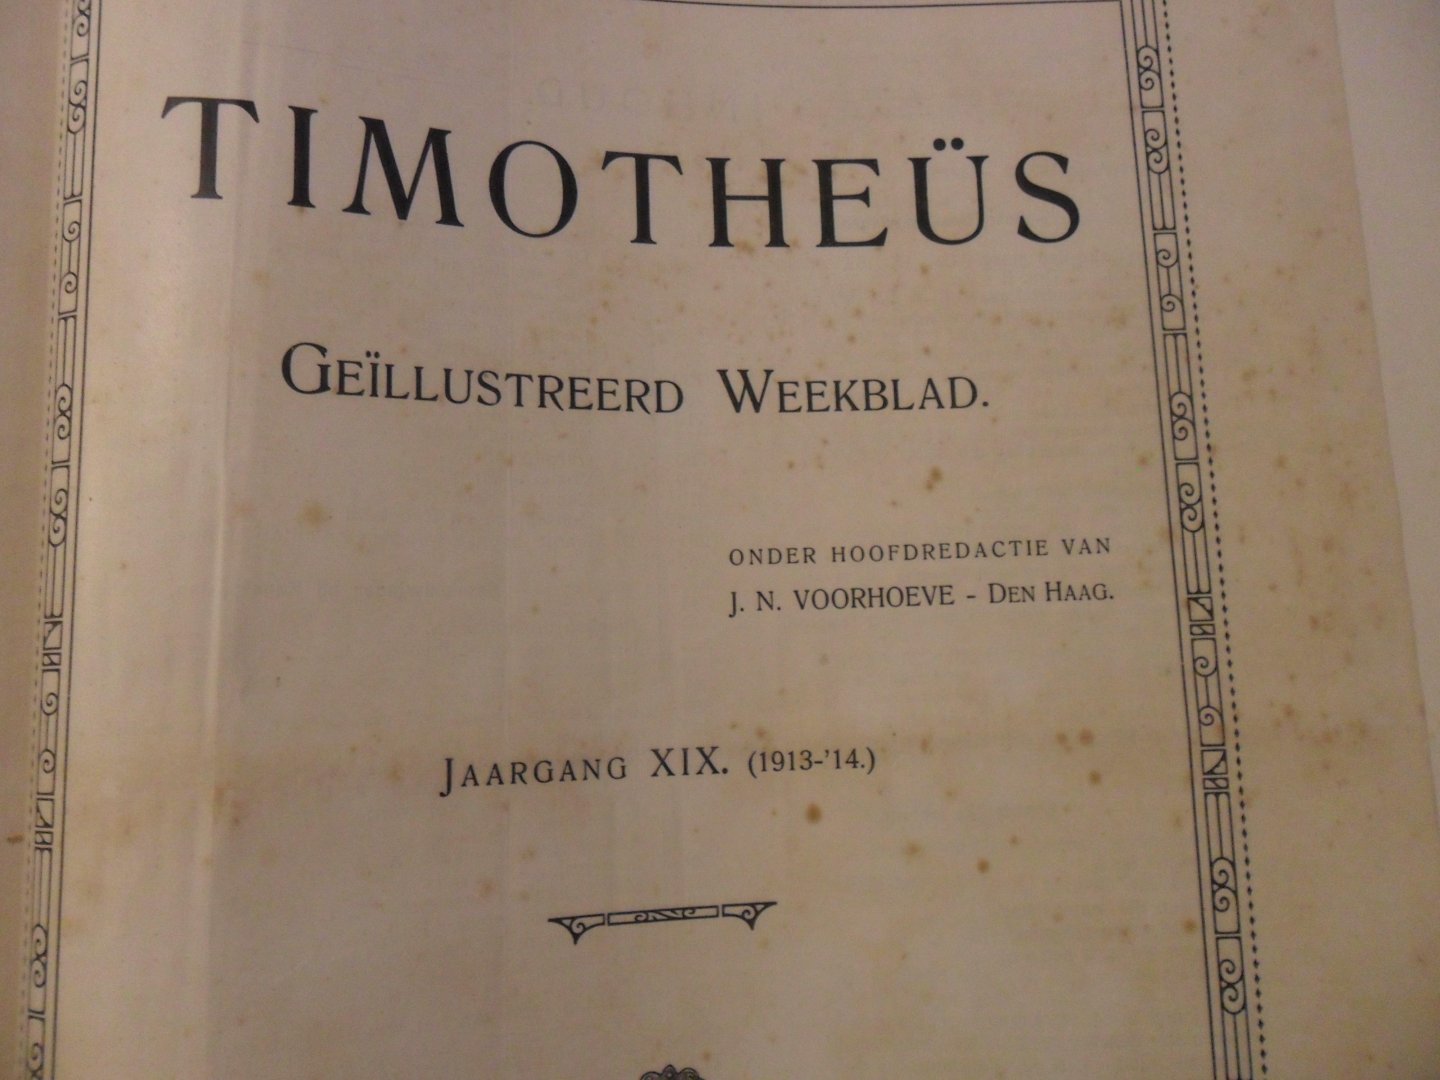 J.N. Voorhoeve Den Haag onder hoofdredactie van - Timotheus geillustreerd weekblad 1913-1914